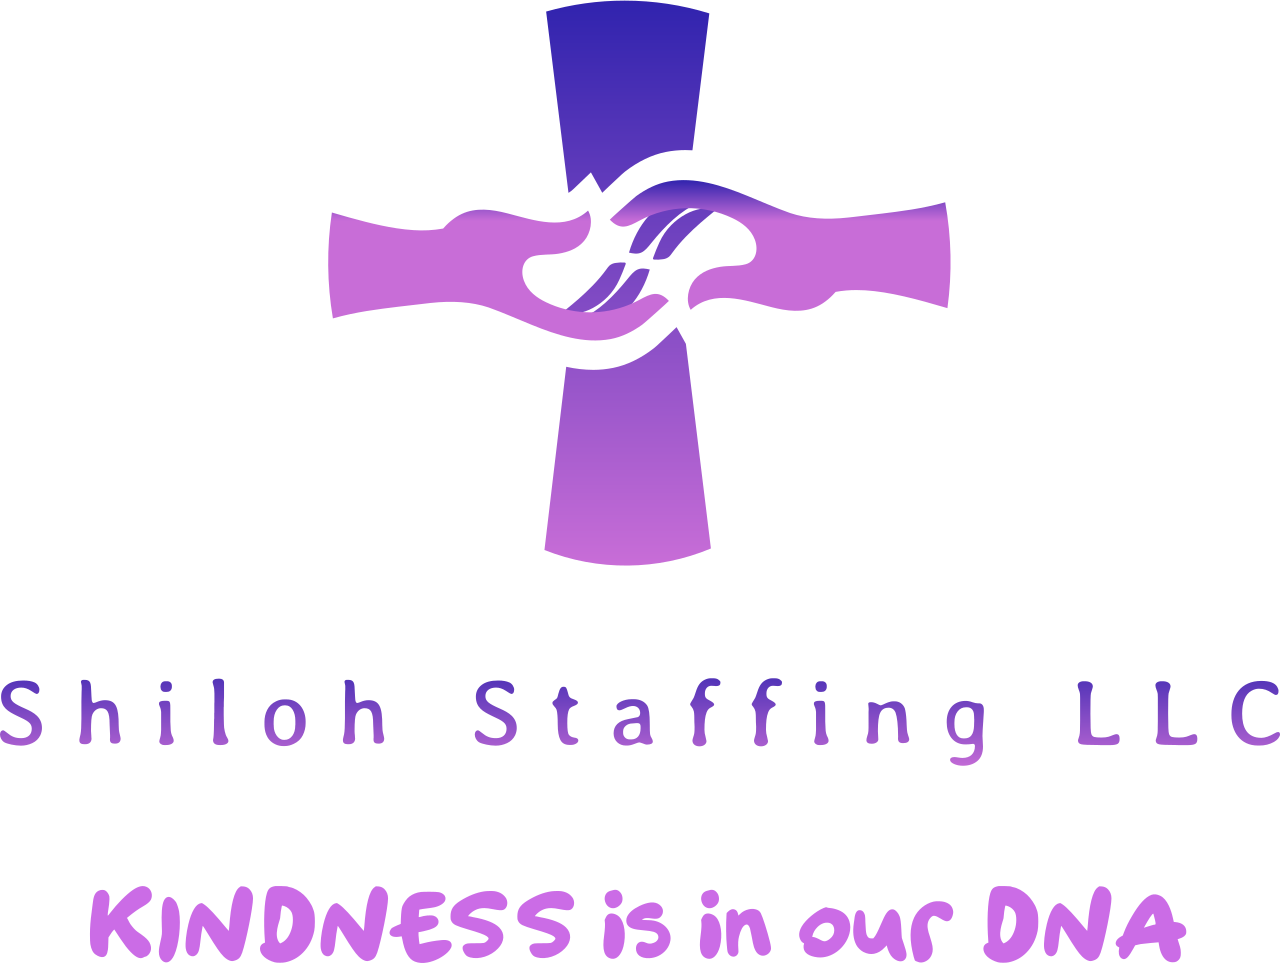 Shiloh Staffing LLC's web page